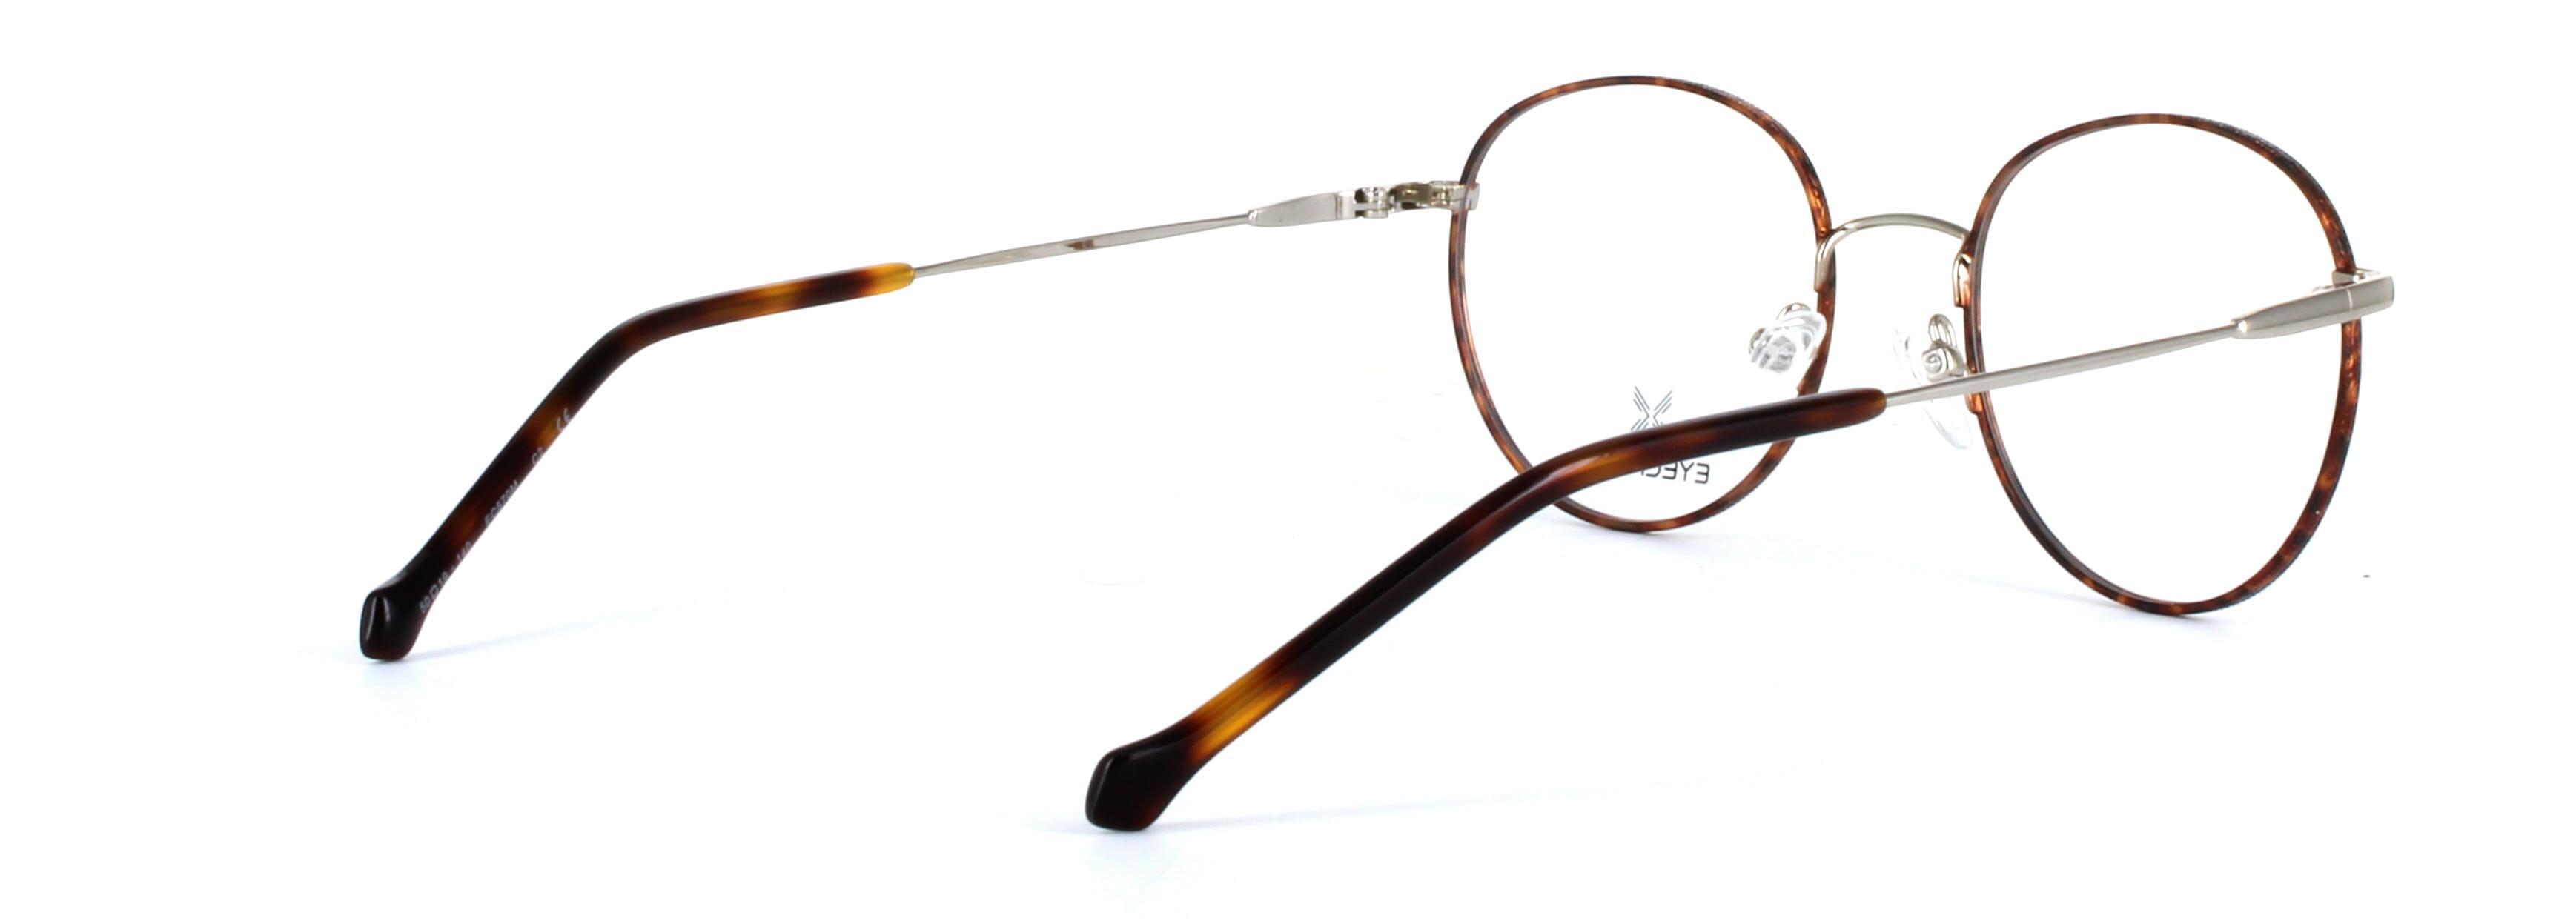 Eyecroxx 570 Tortoise Full Rim Round Metal Glasses - Image View 4